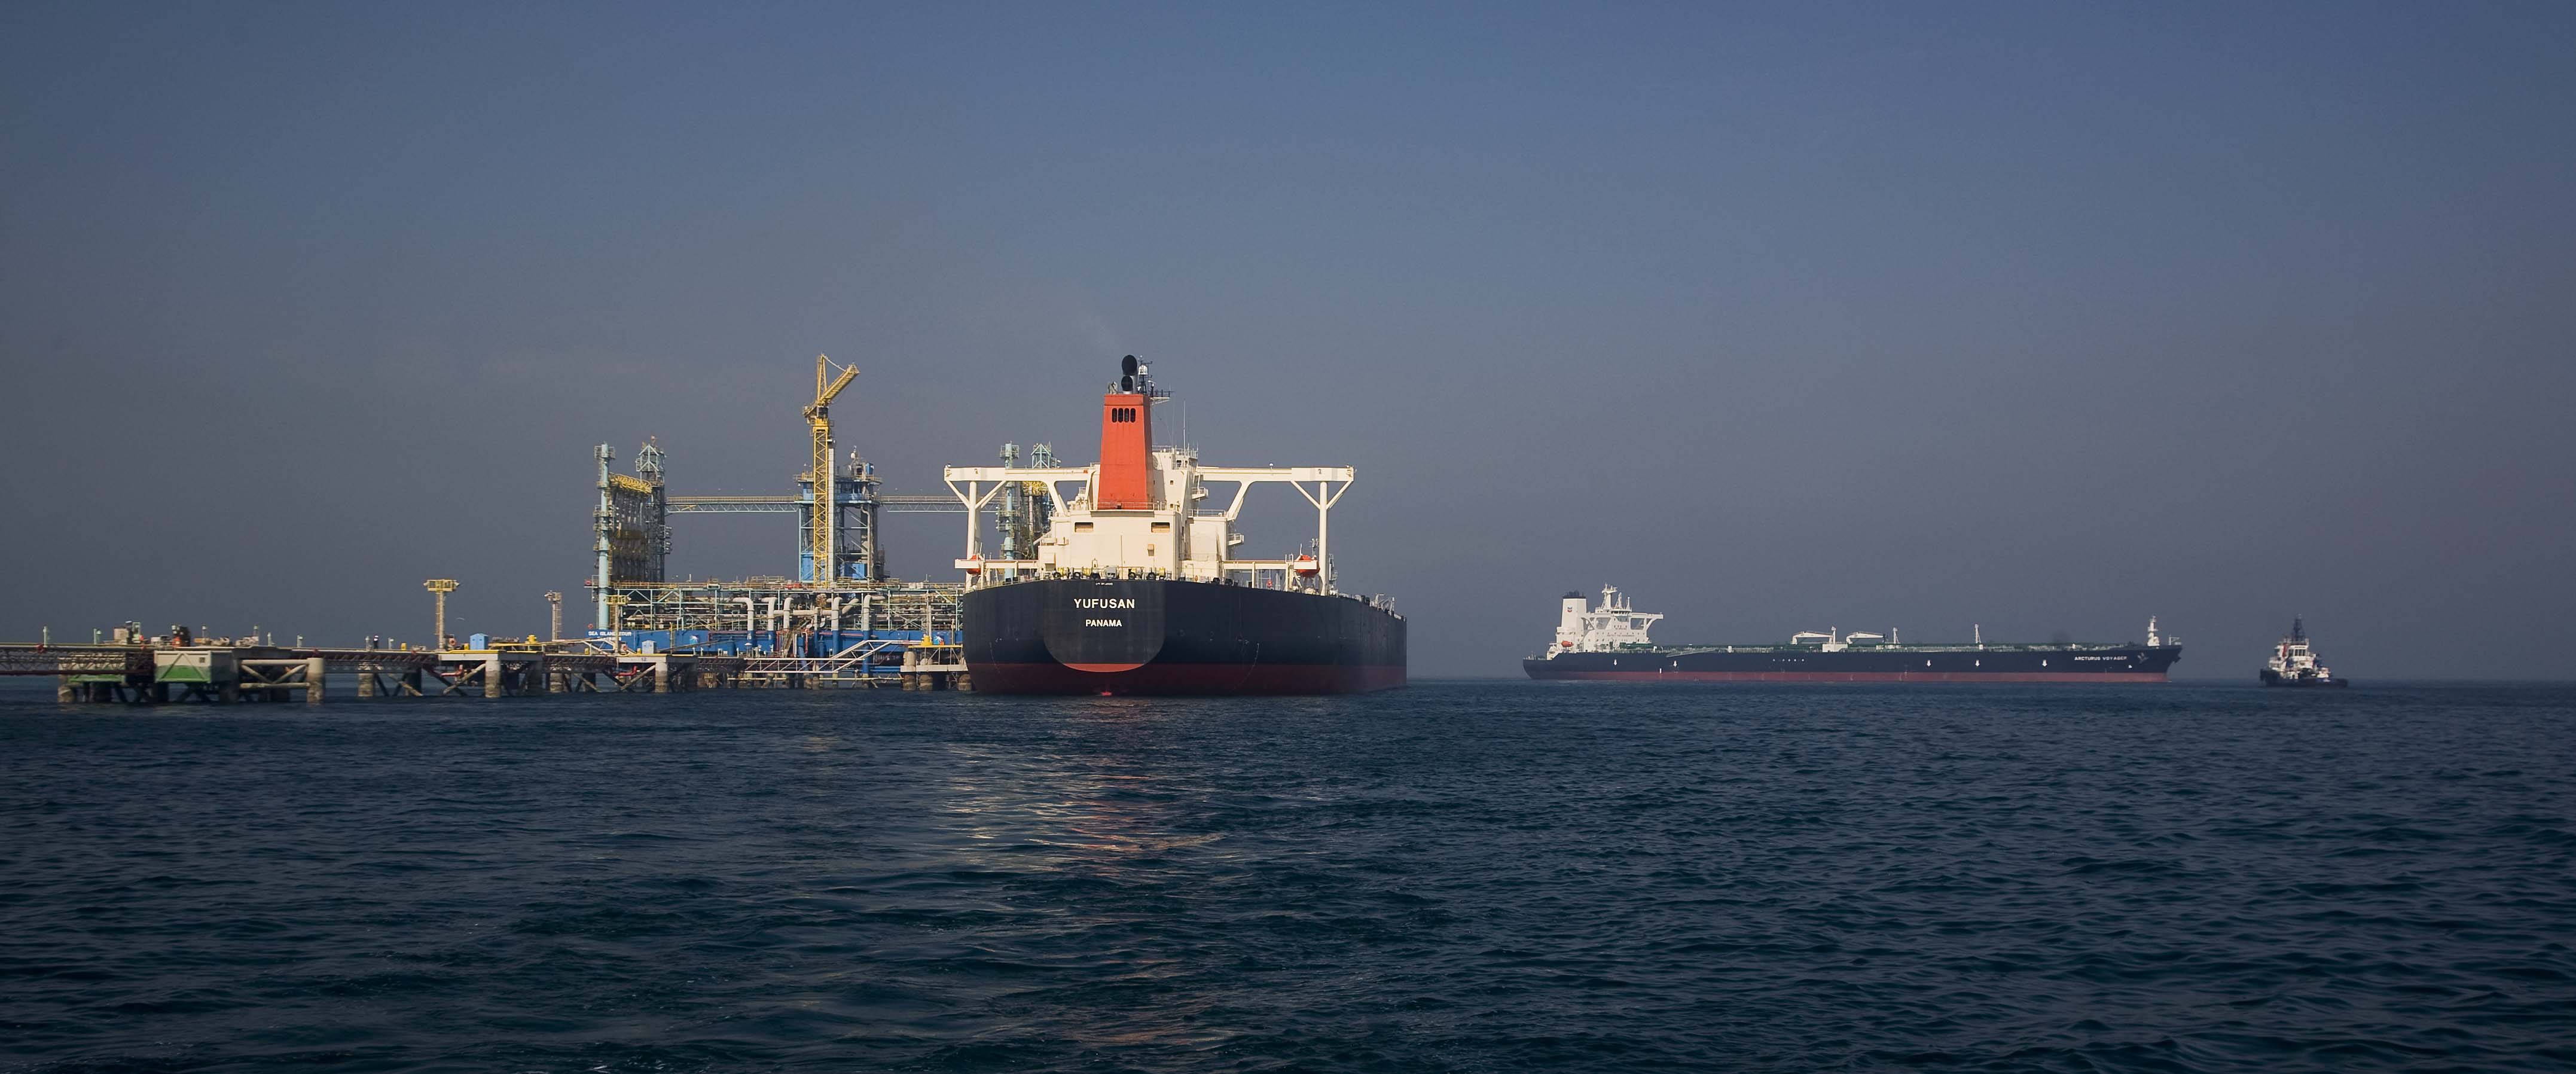 Two crude oil tankers at the Ras Tanura ship terminal